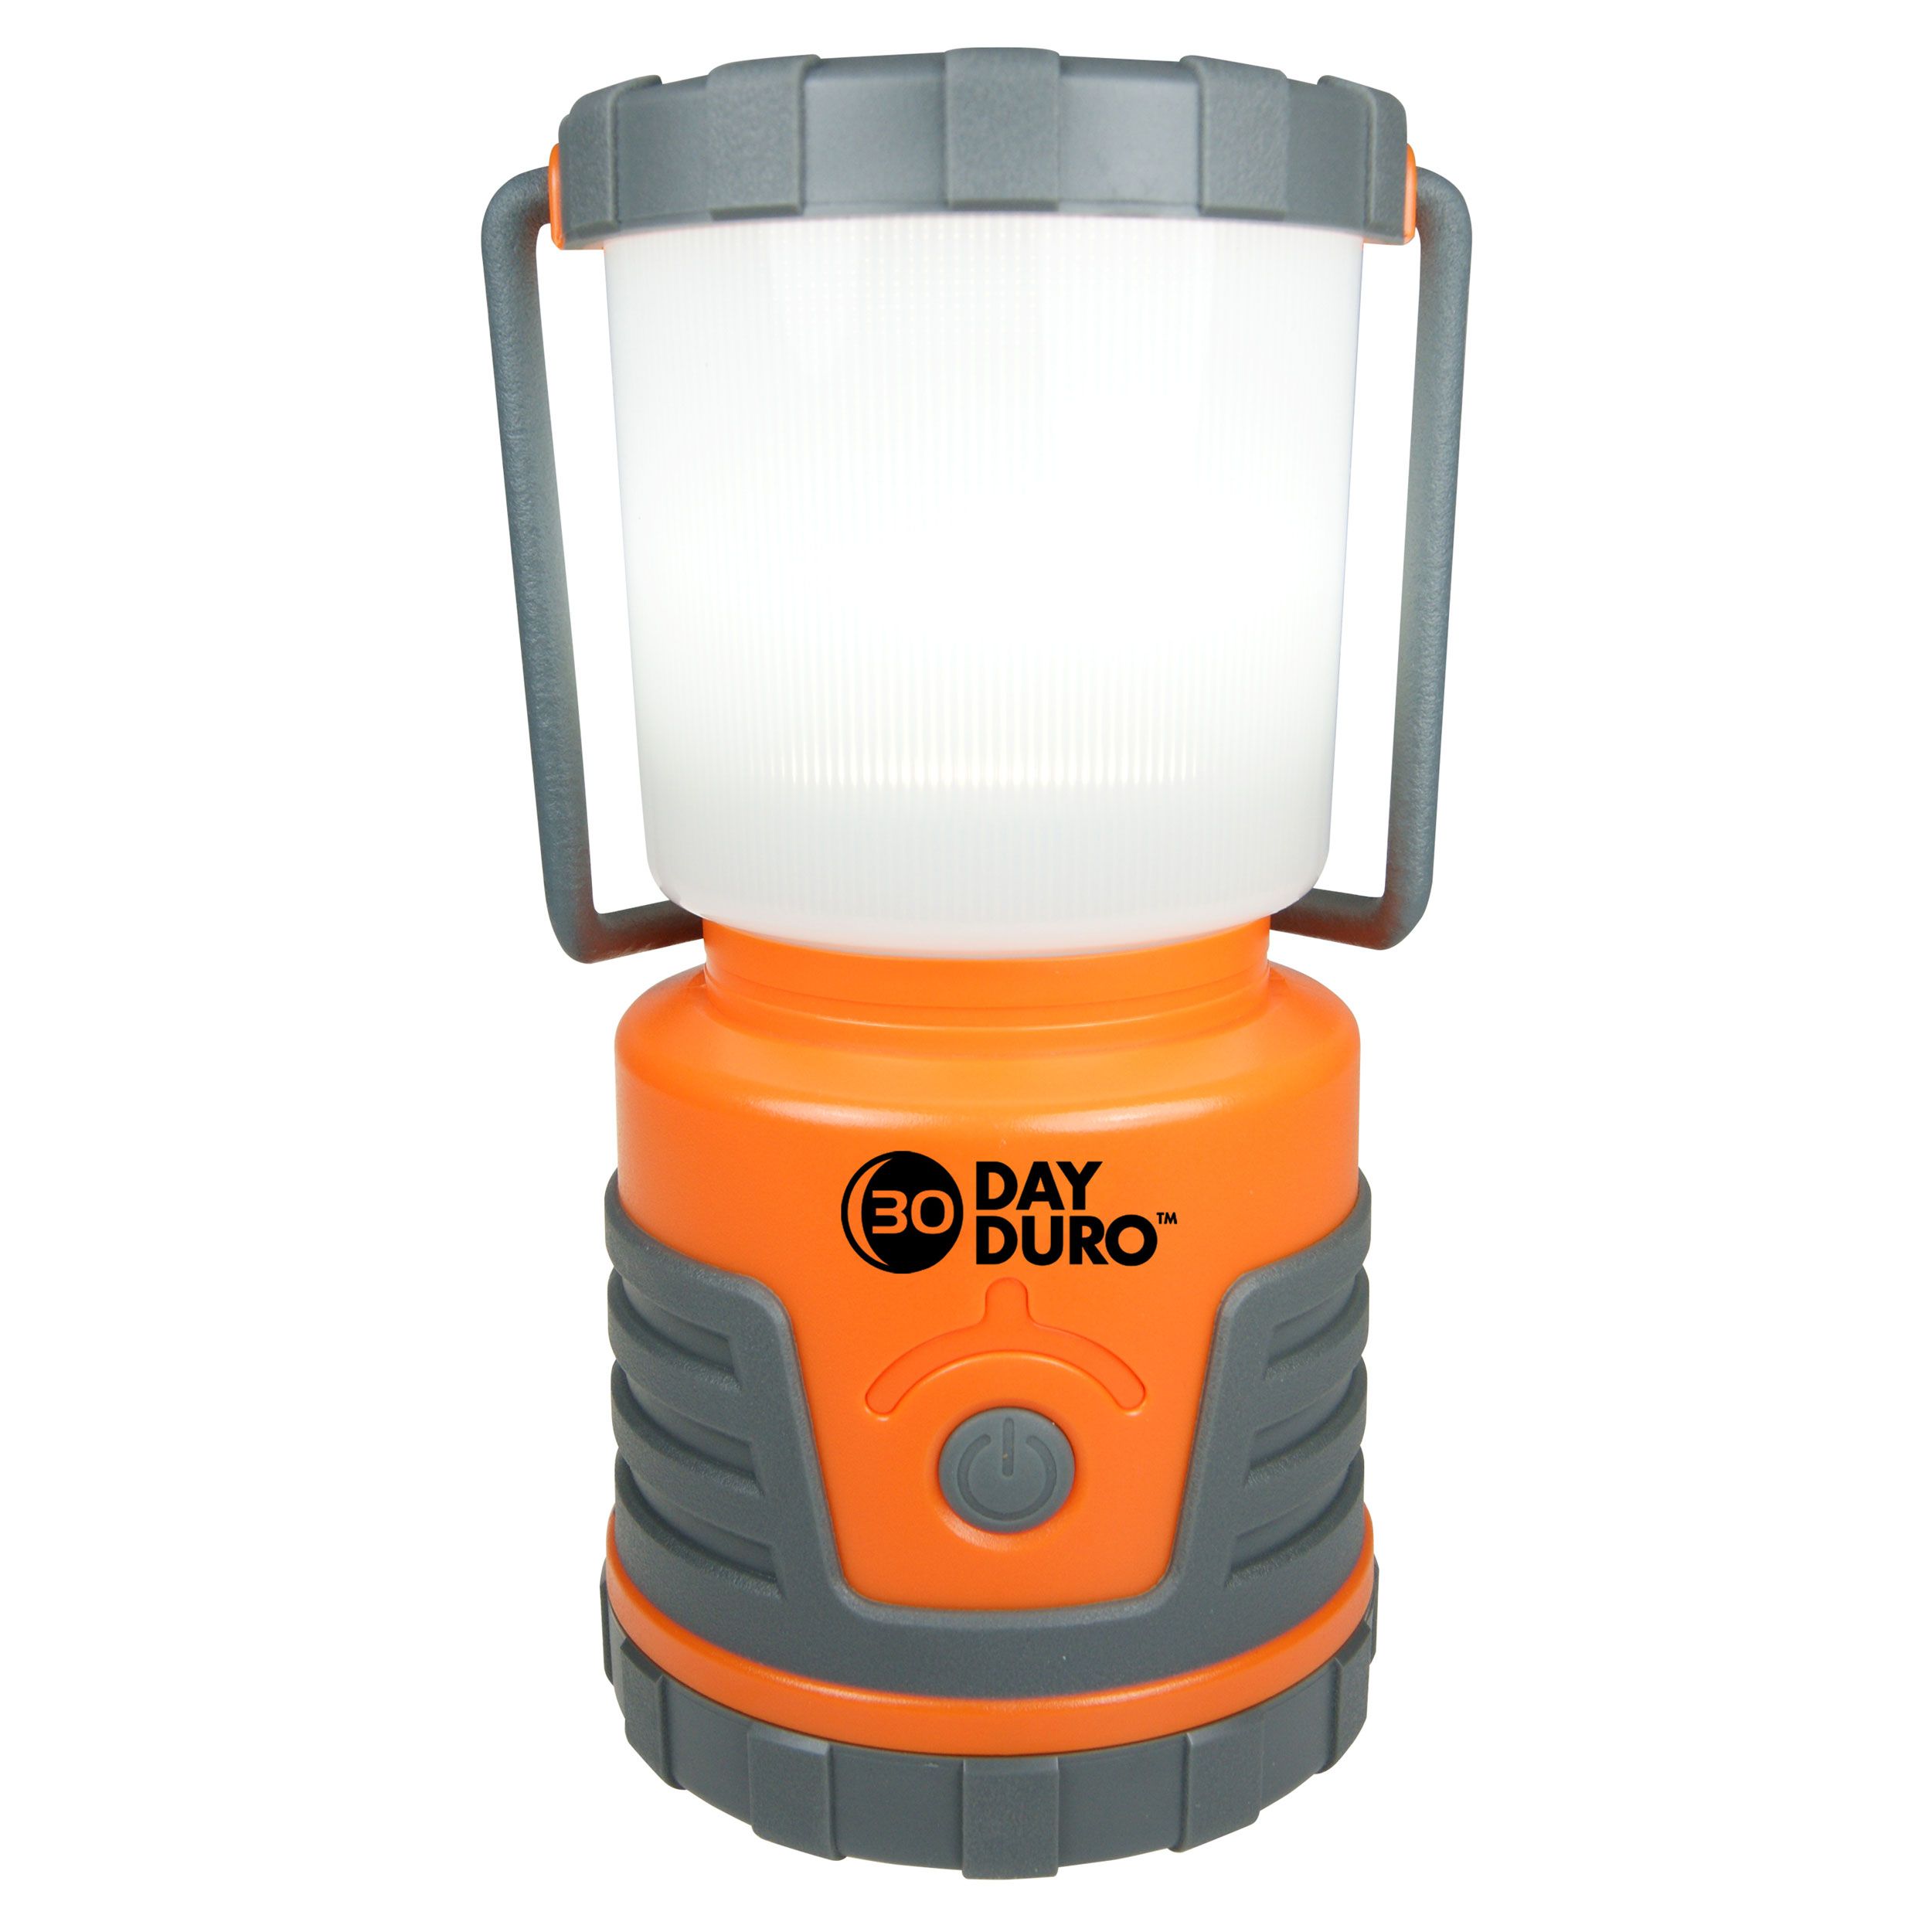 Ultimate Survival Technologies 45-Day LED Lantern